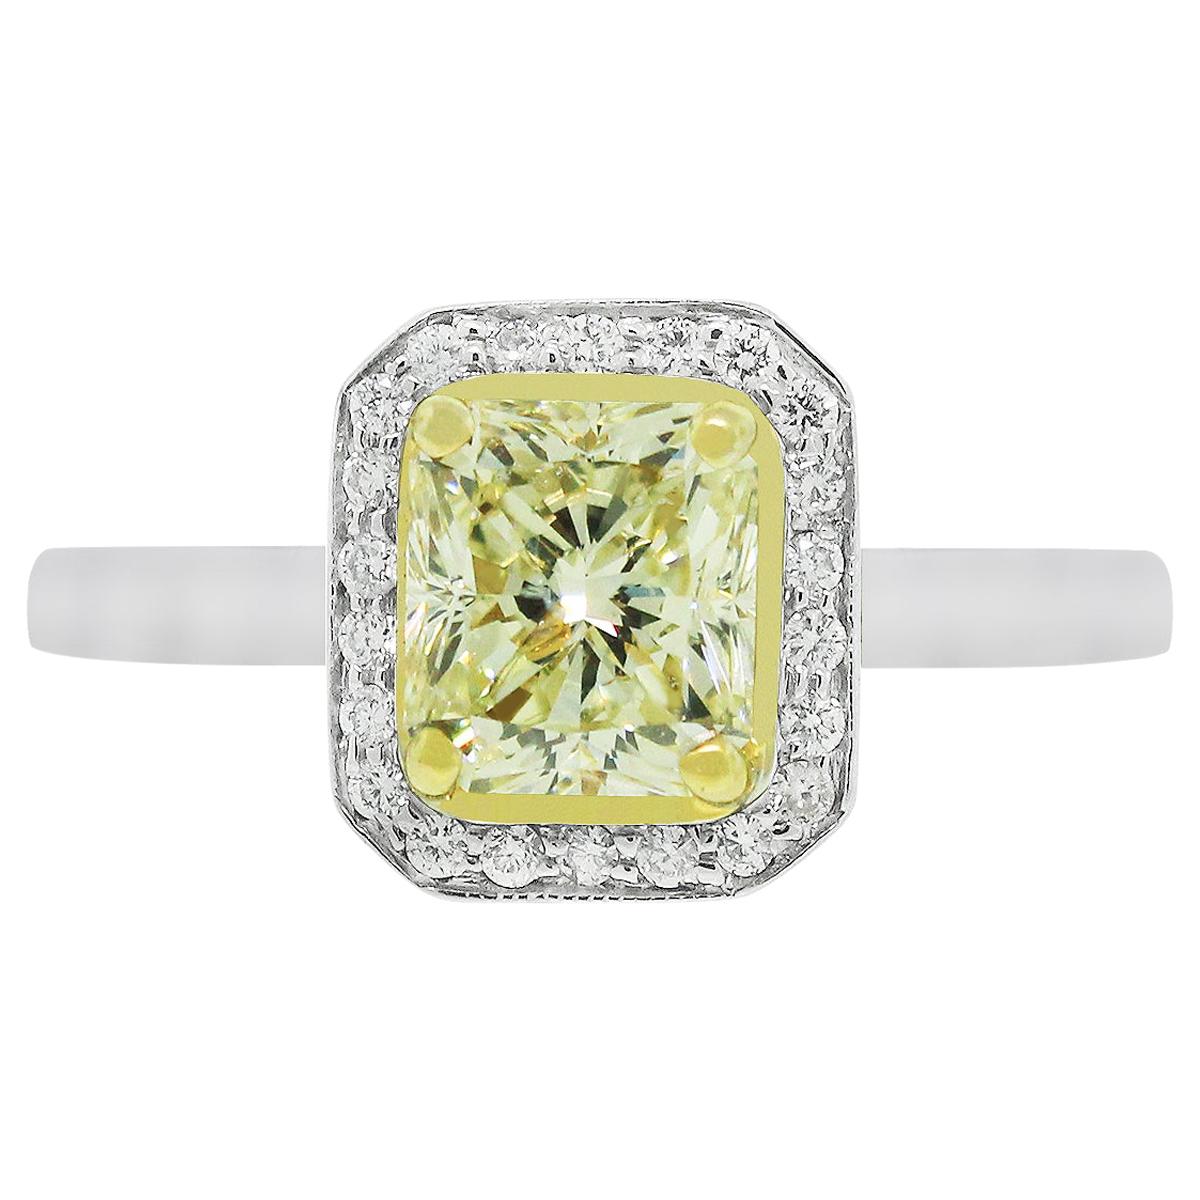 3.01 Carat Fancy Yellow Diamond Engagement Ring